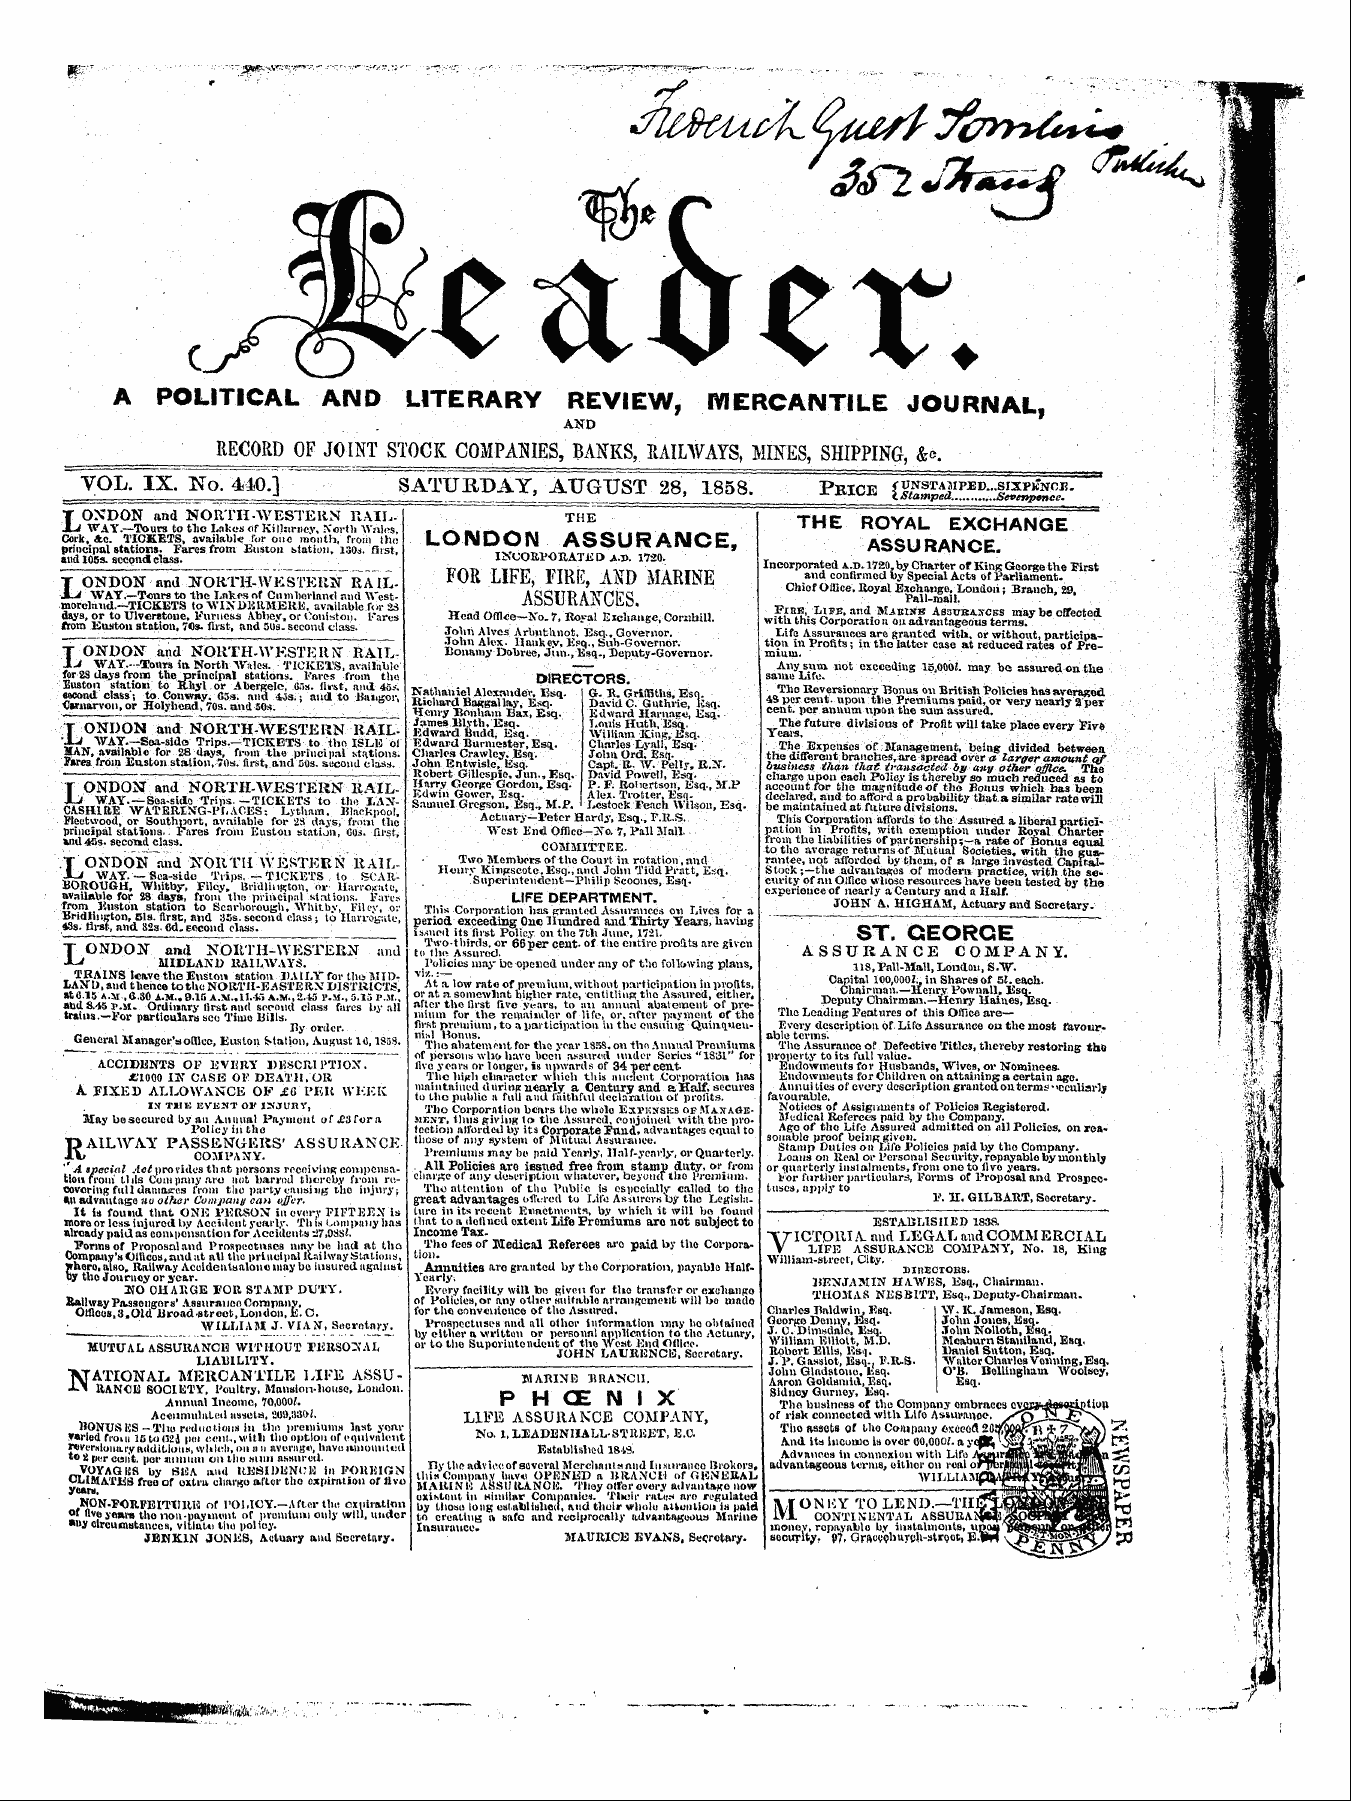 Leader (1850-1860): jS F Y, 1st edition - Vol. Ix. No. 410.] Saturday, August 28, ...